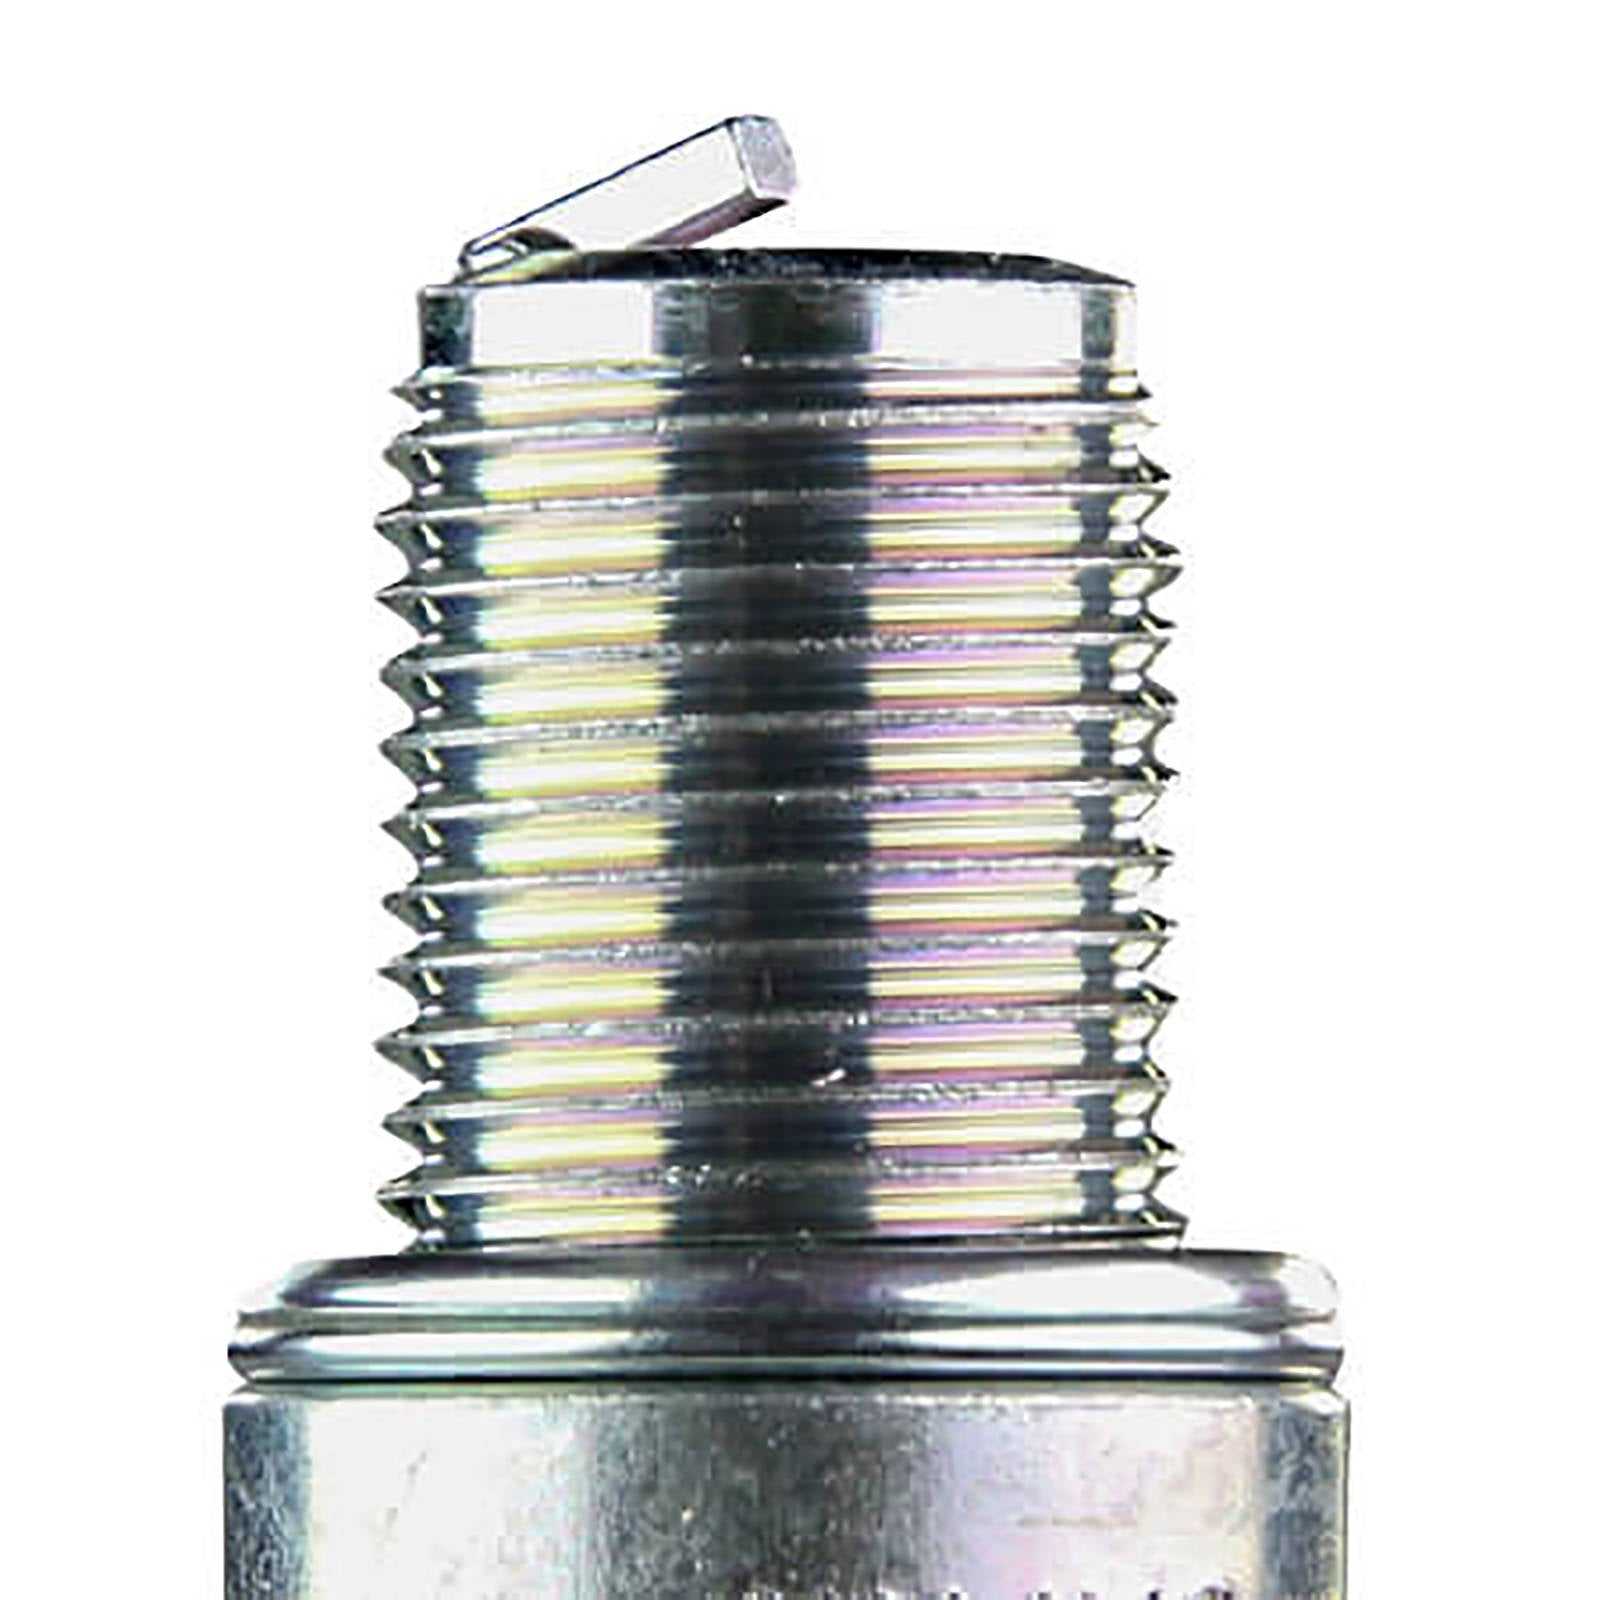 NGK, NGK Spark Plug - SILMAR9-B9 (95399)